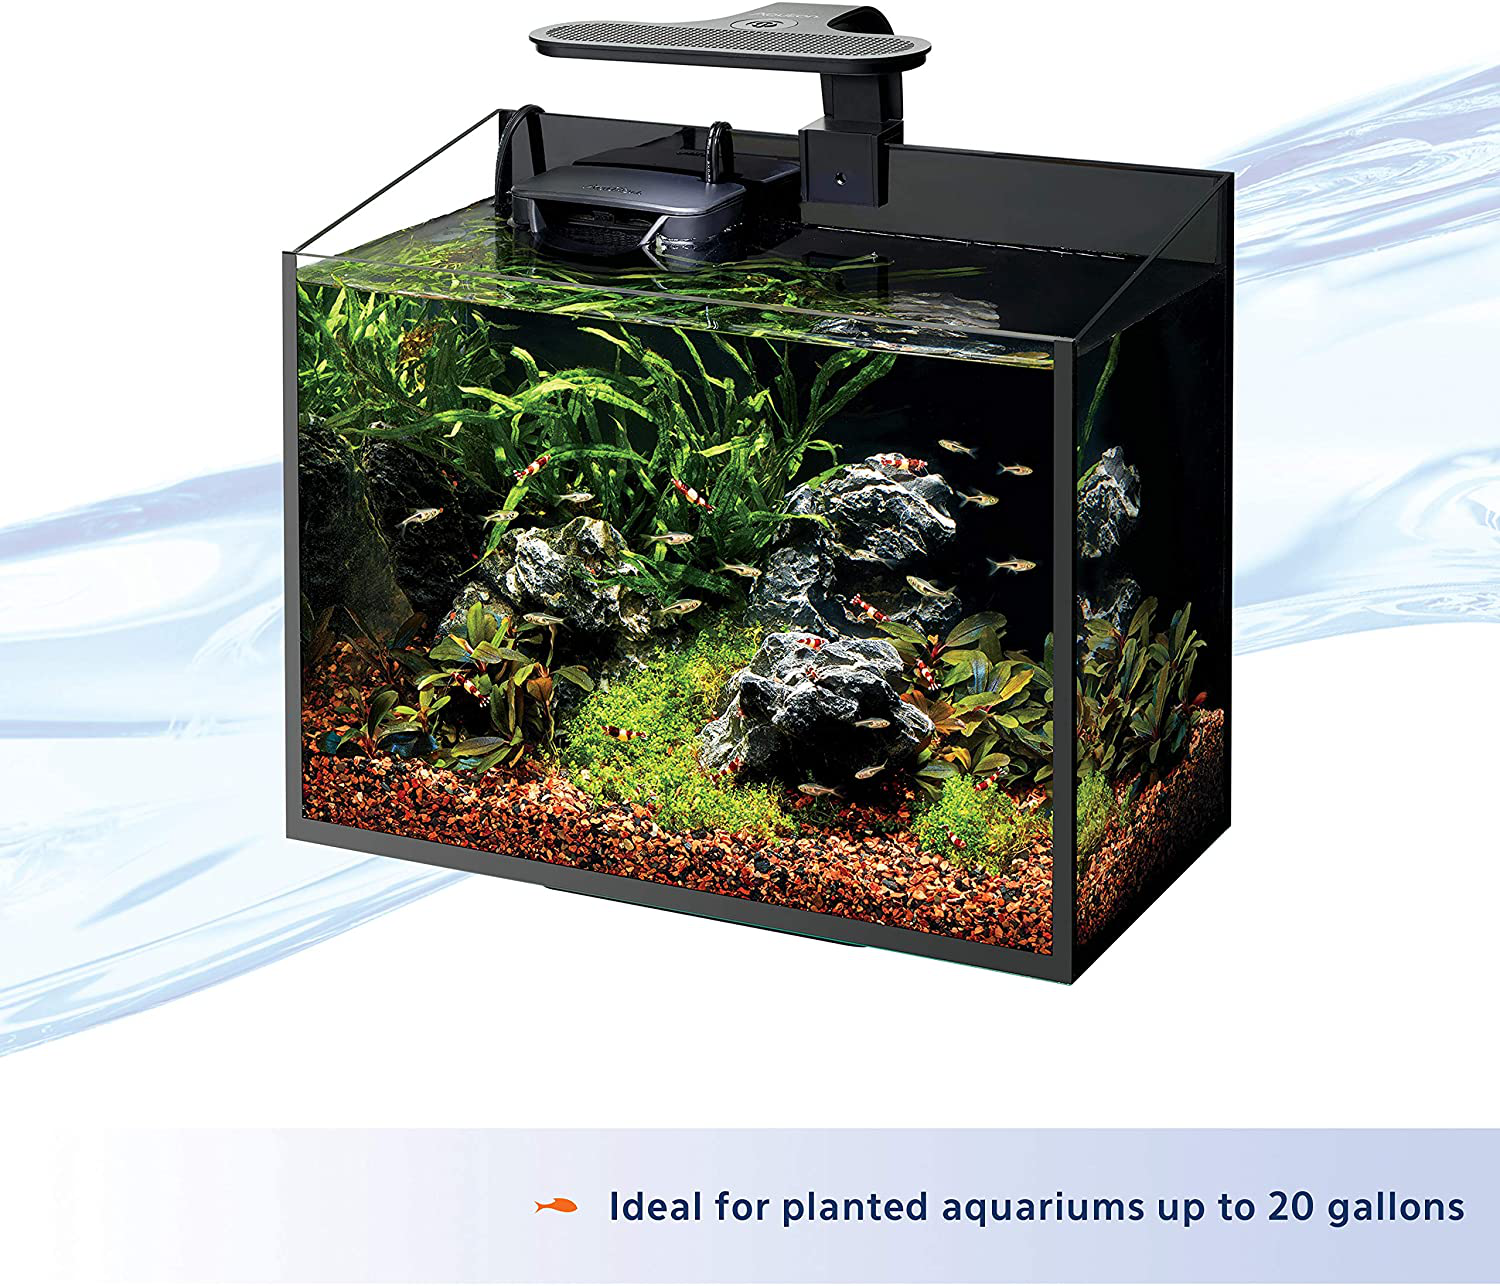 Aqueon Planted Aquarium Clip-On LED Light One Size